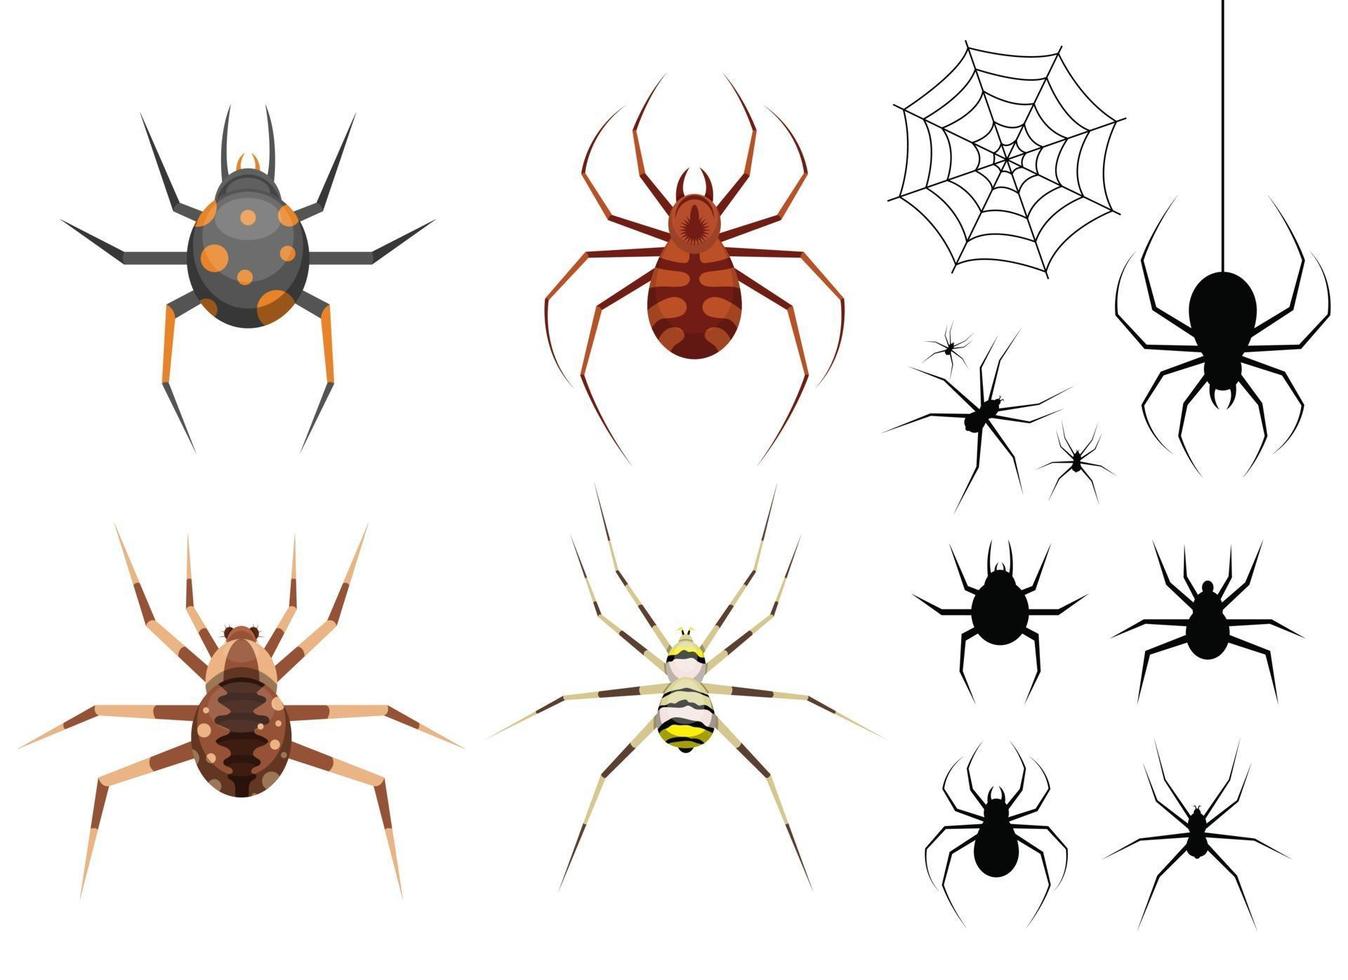 Spider vector design illustration set isolated on white background